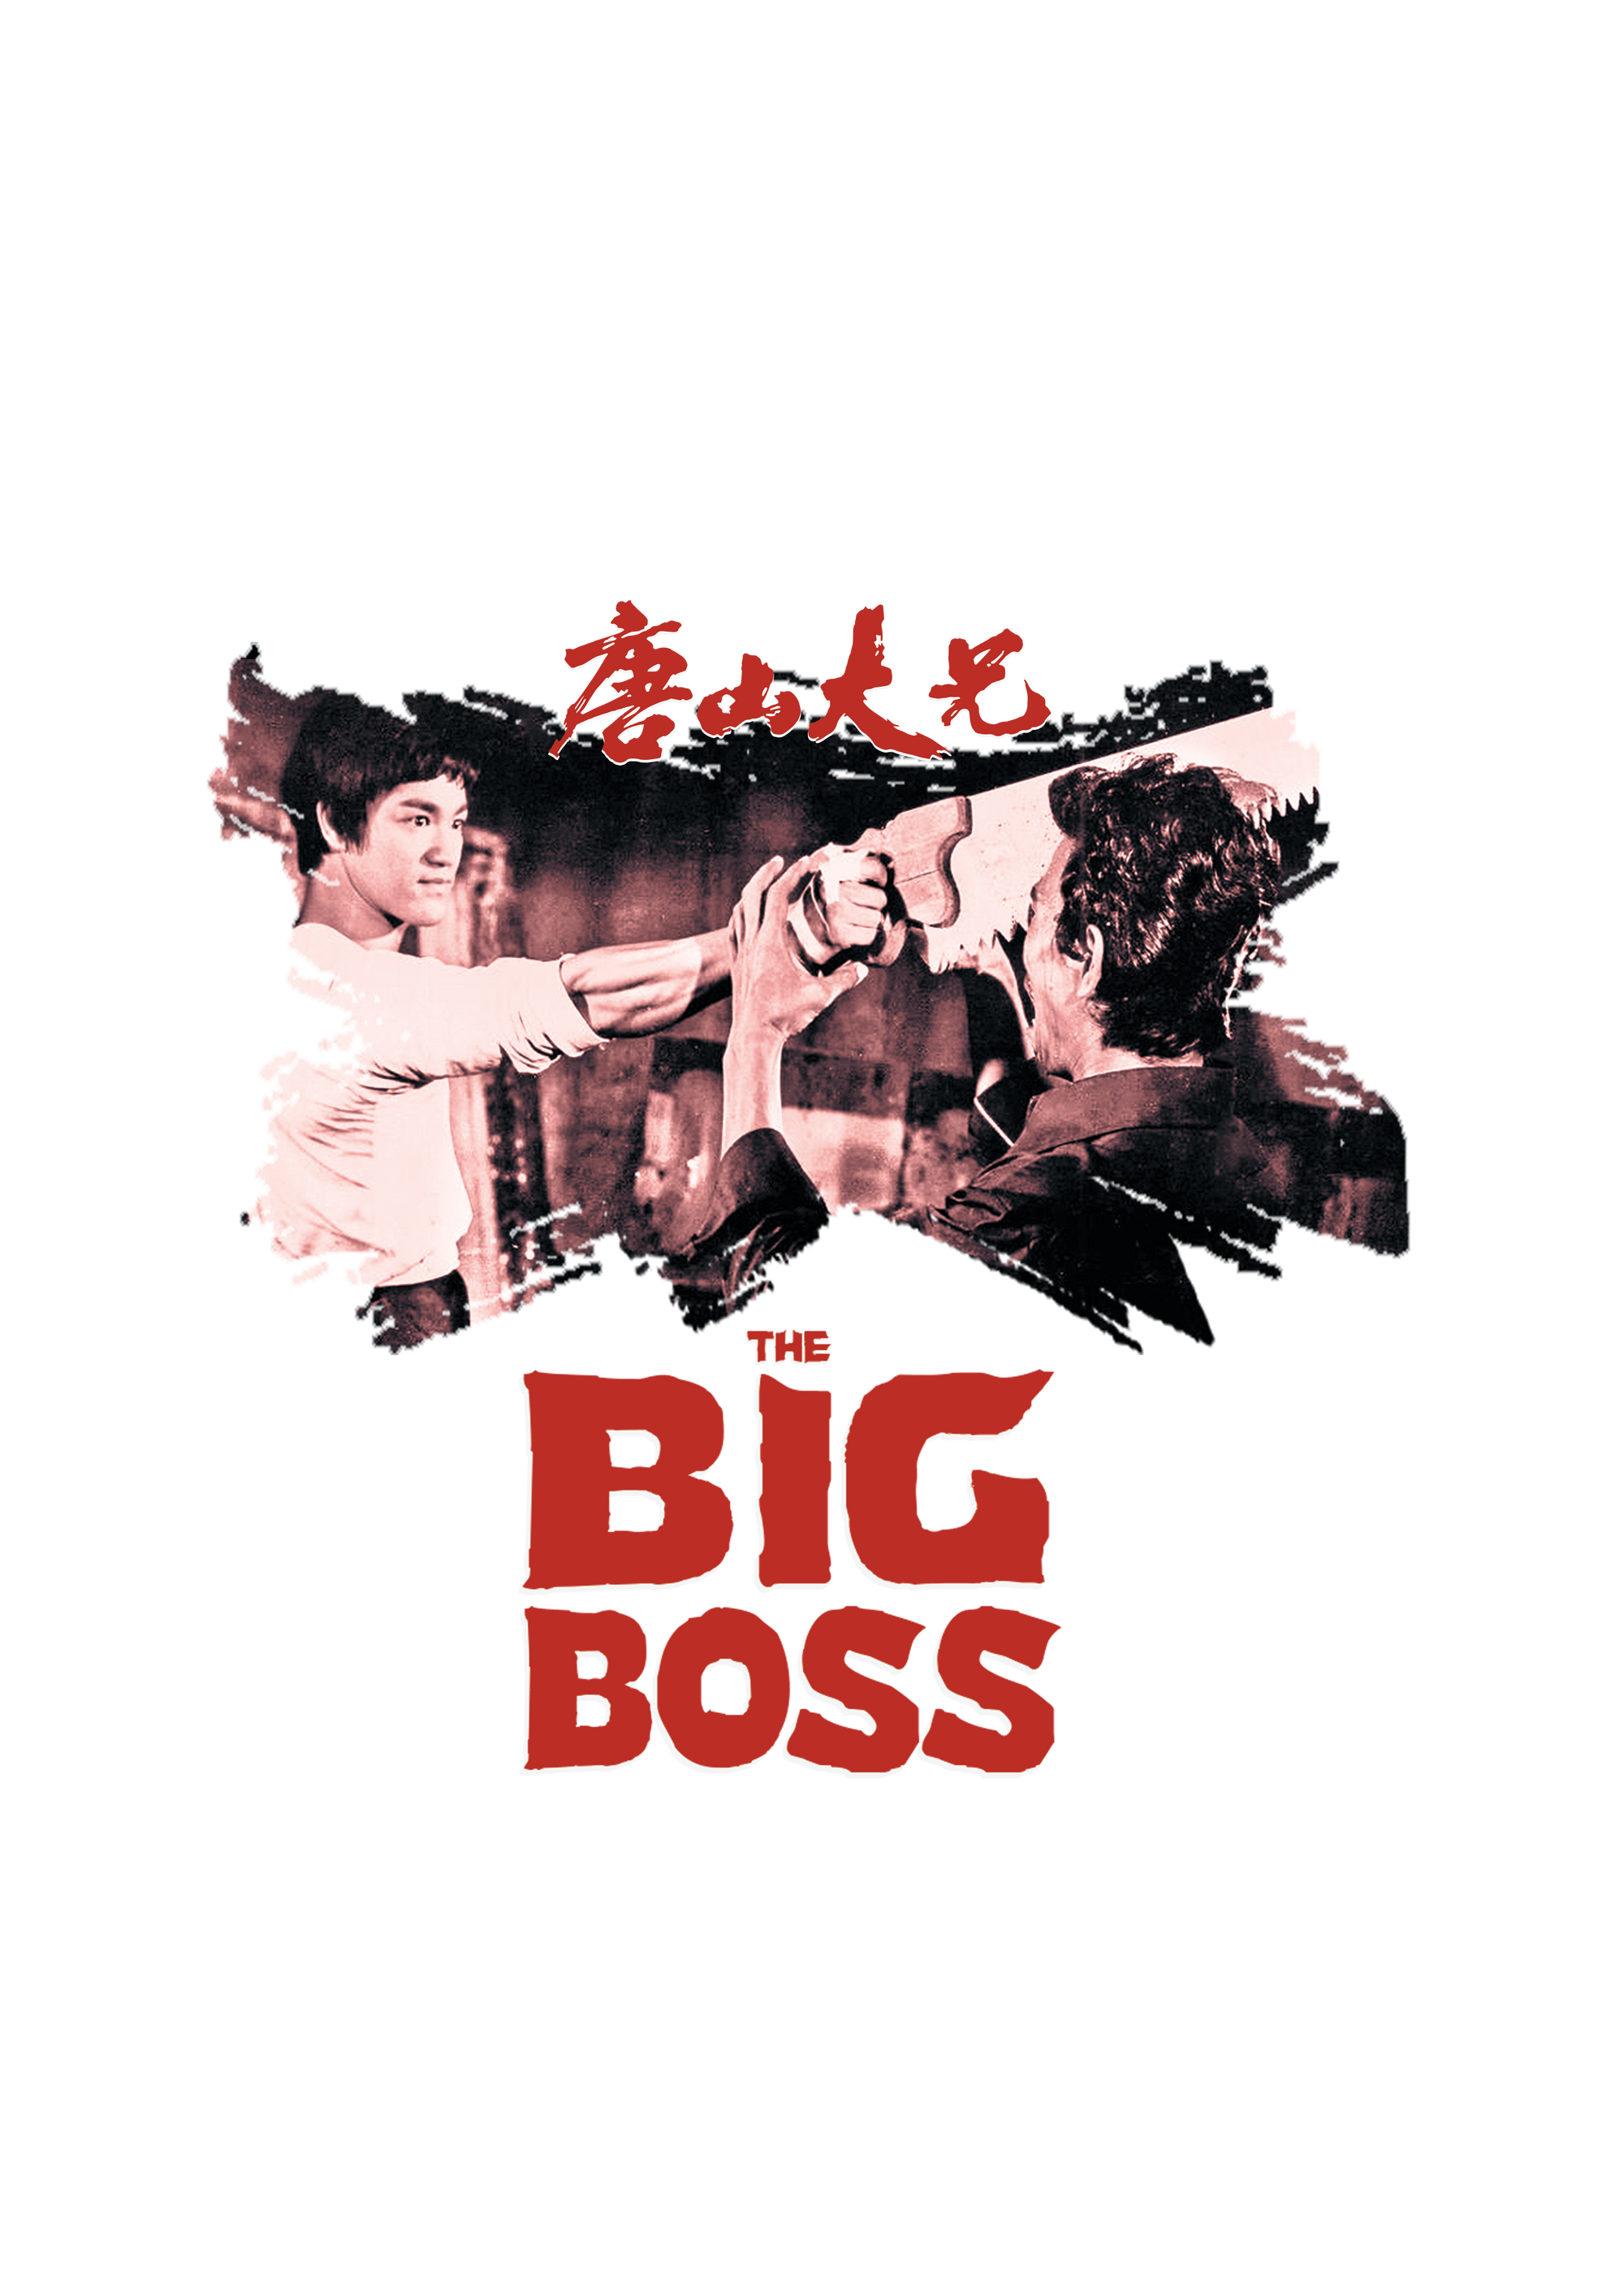 'Big Boss' Adult T Shirt